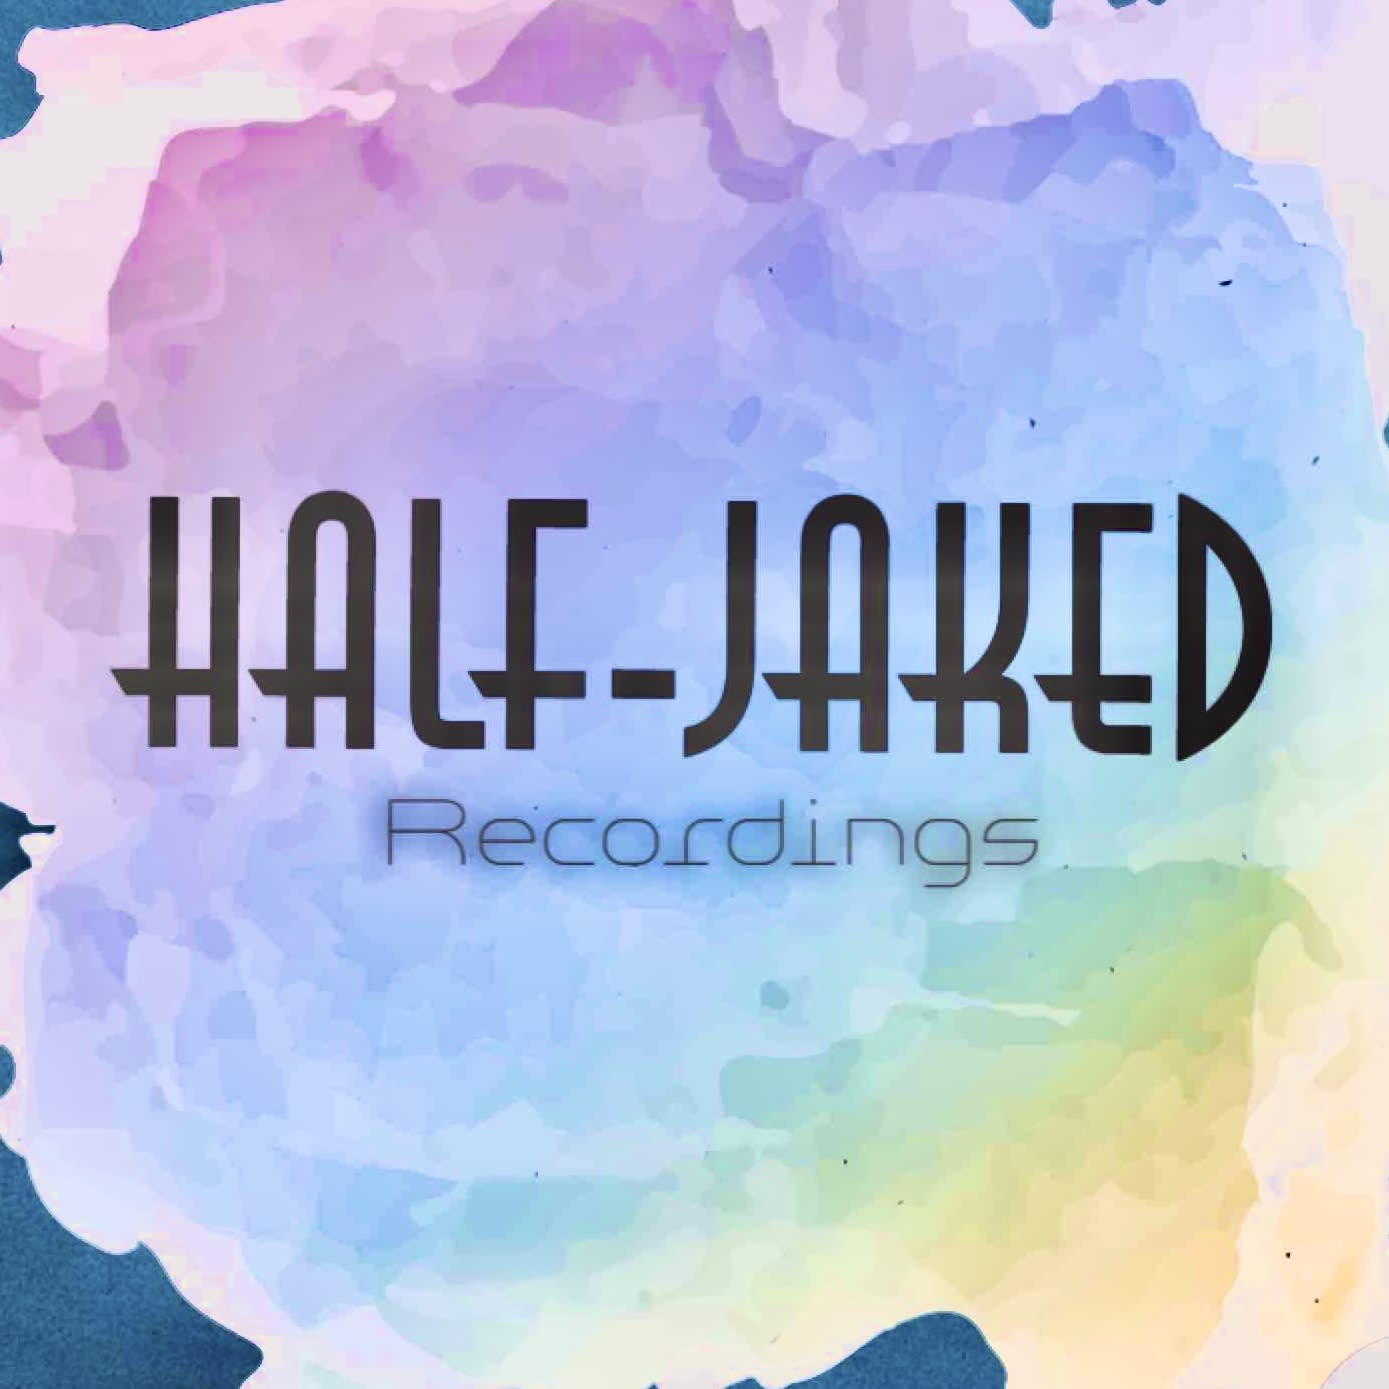 Half Jaked Recordings